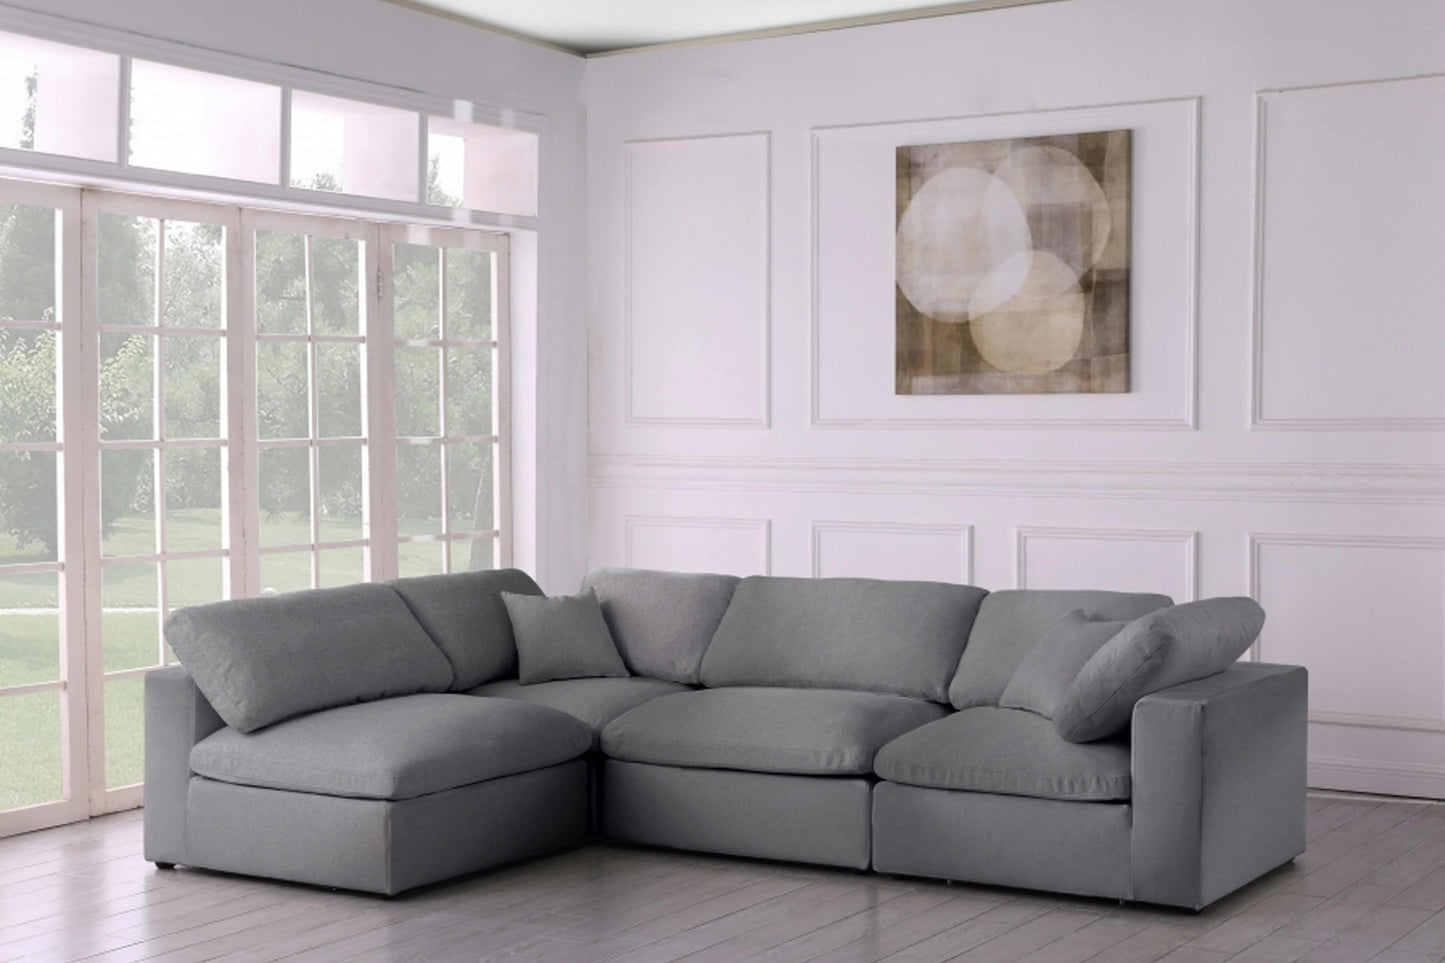 Serene Linen Deluxe Modular Down Filled Cloud-Like Comfort Overstuffed Sectional SKU: 601-Sec4B - Venini Furniture 